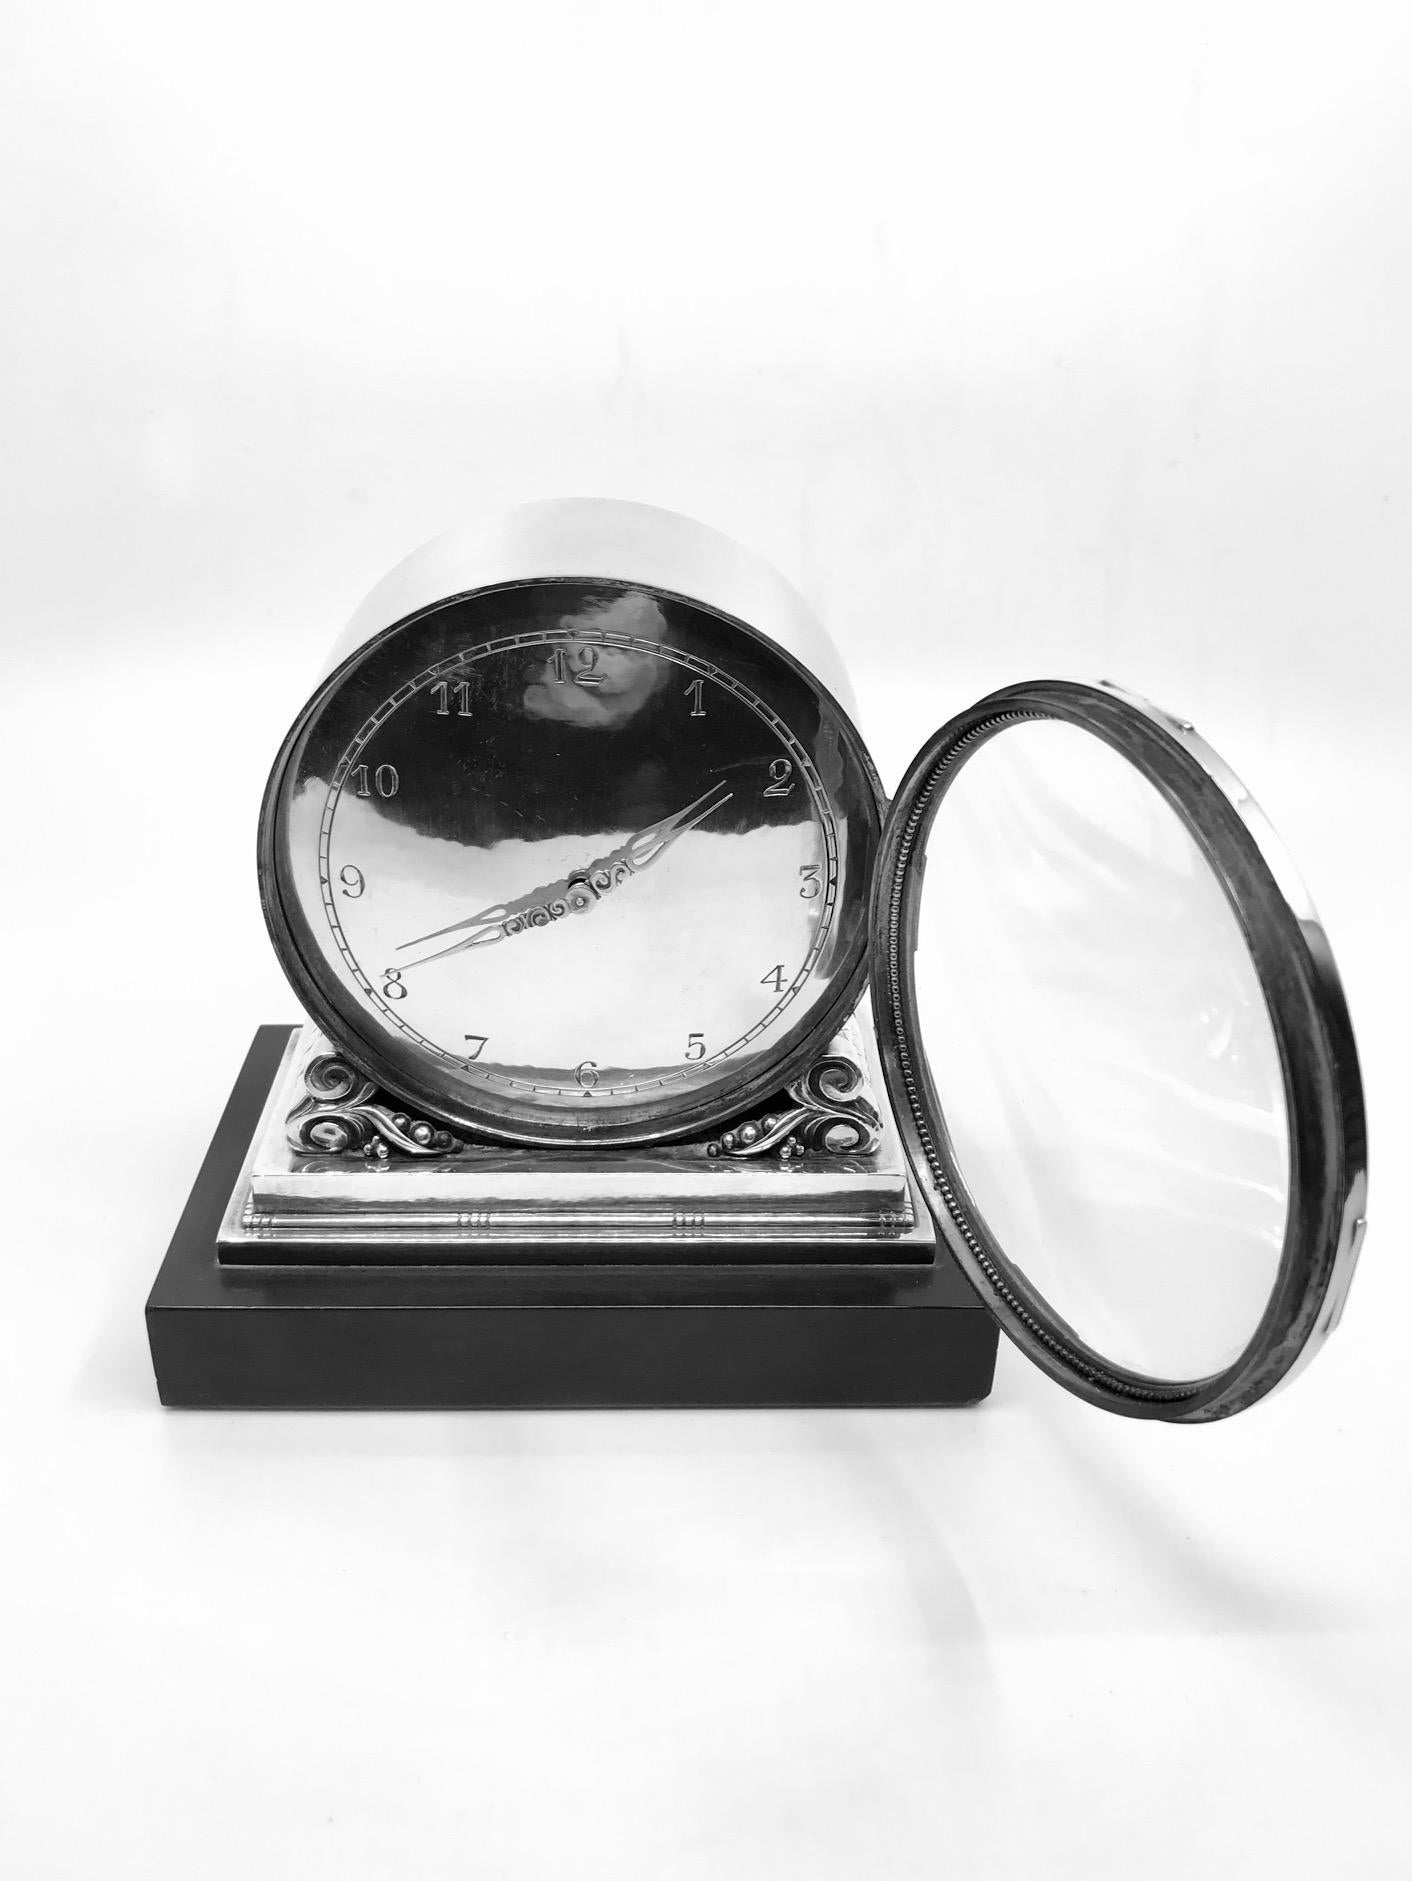 Art Nouveau Vintage Georg Jensen Clock 596 by Johan Rohde